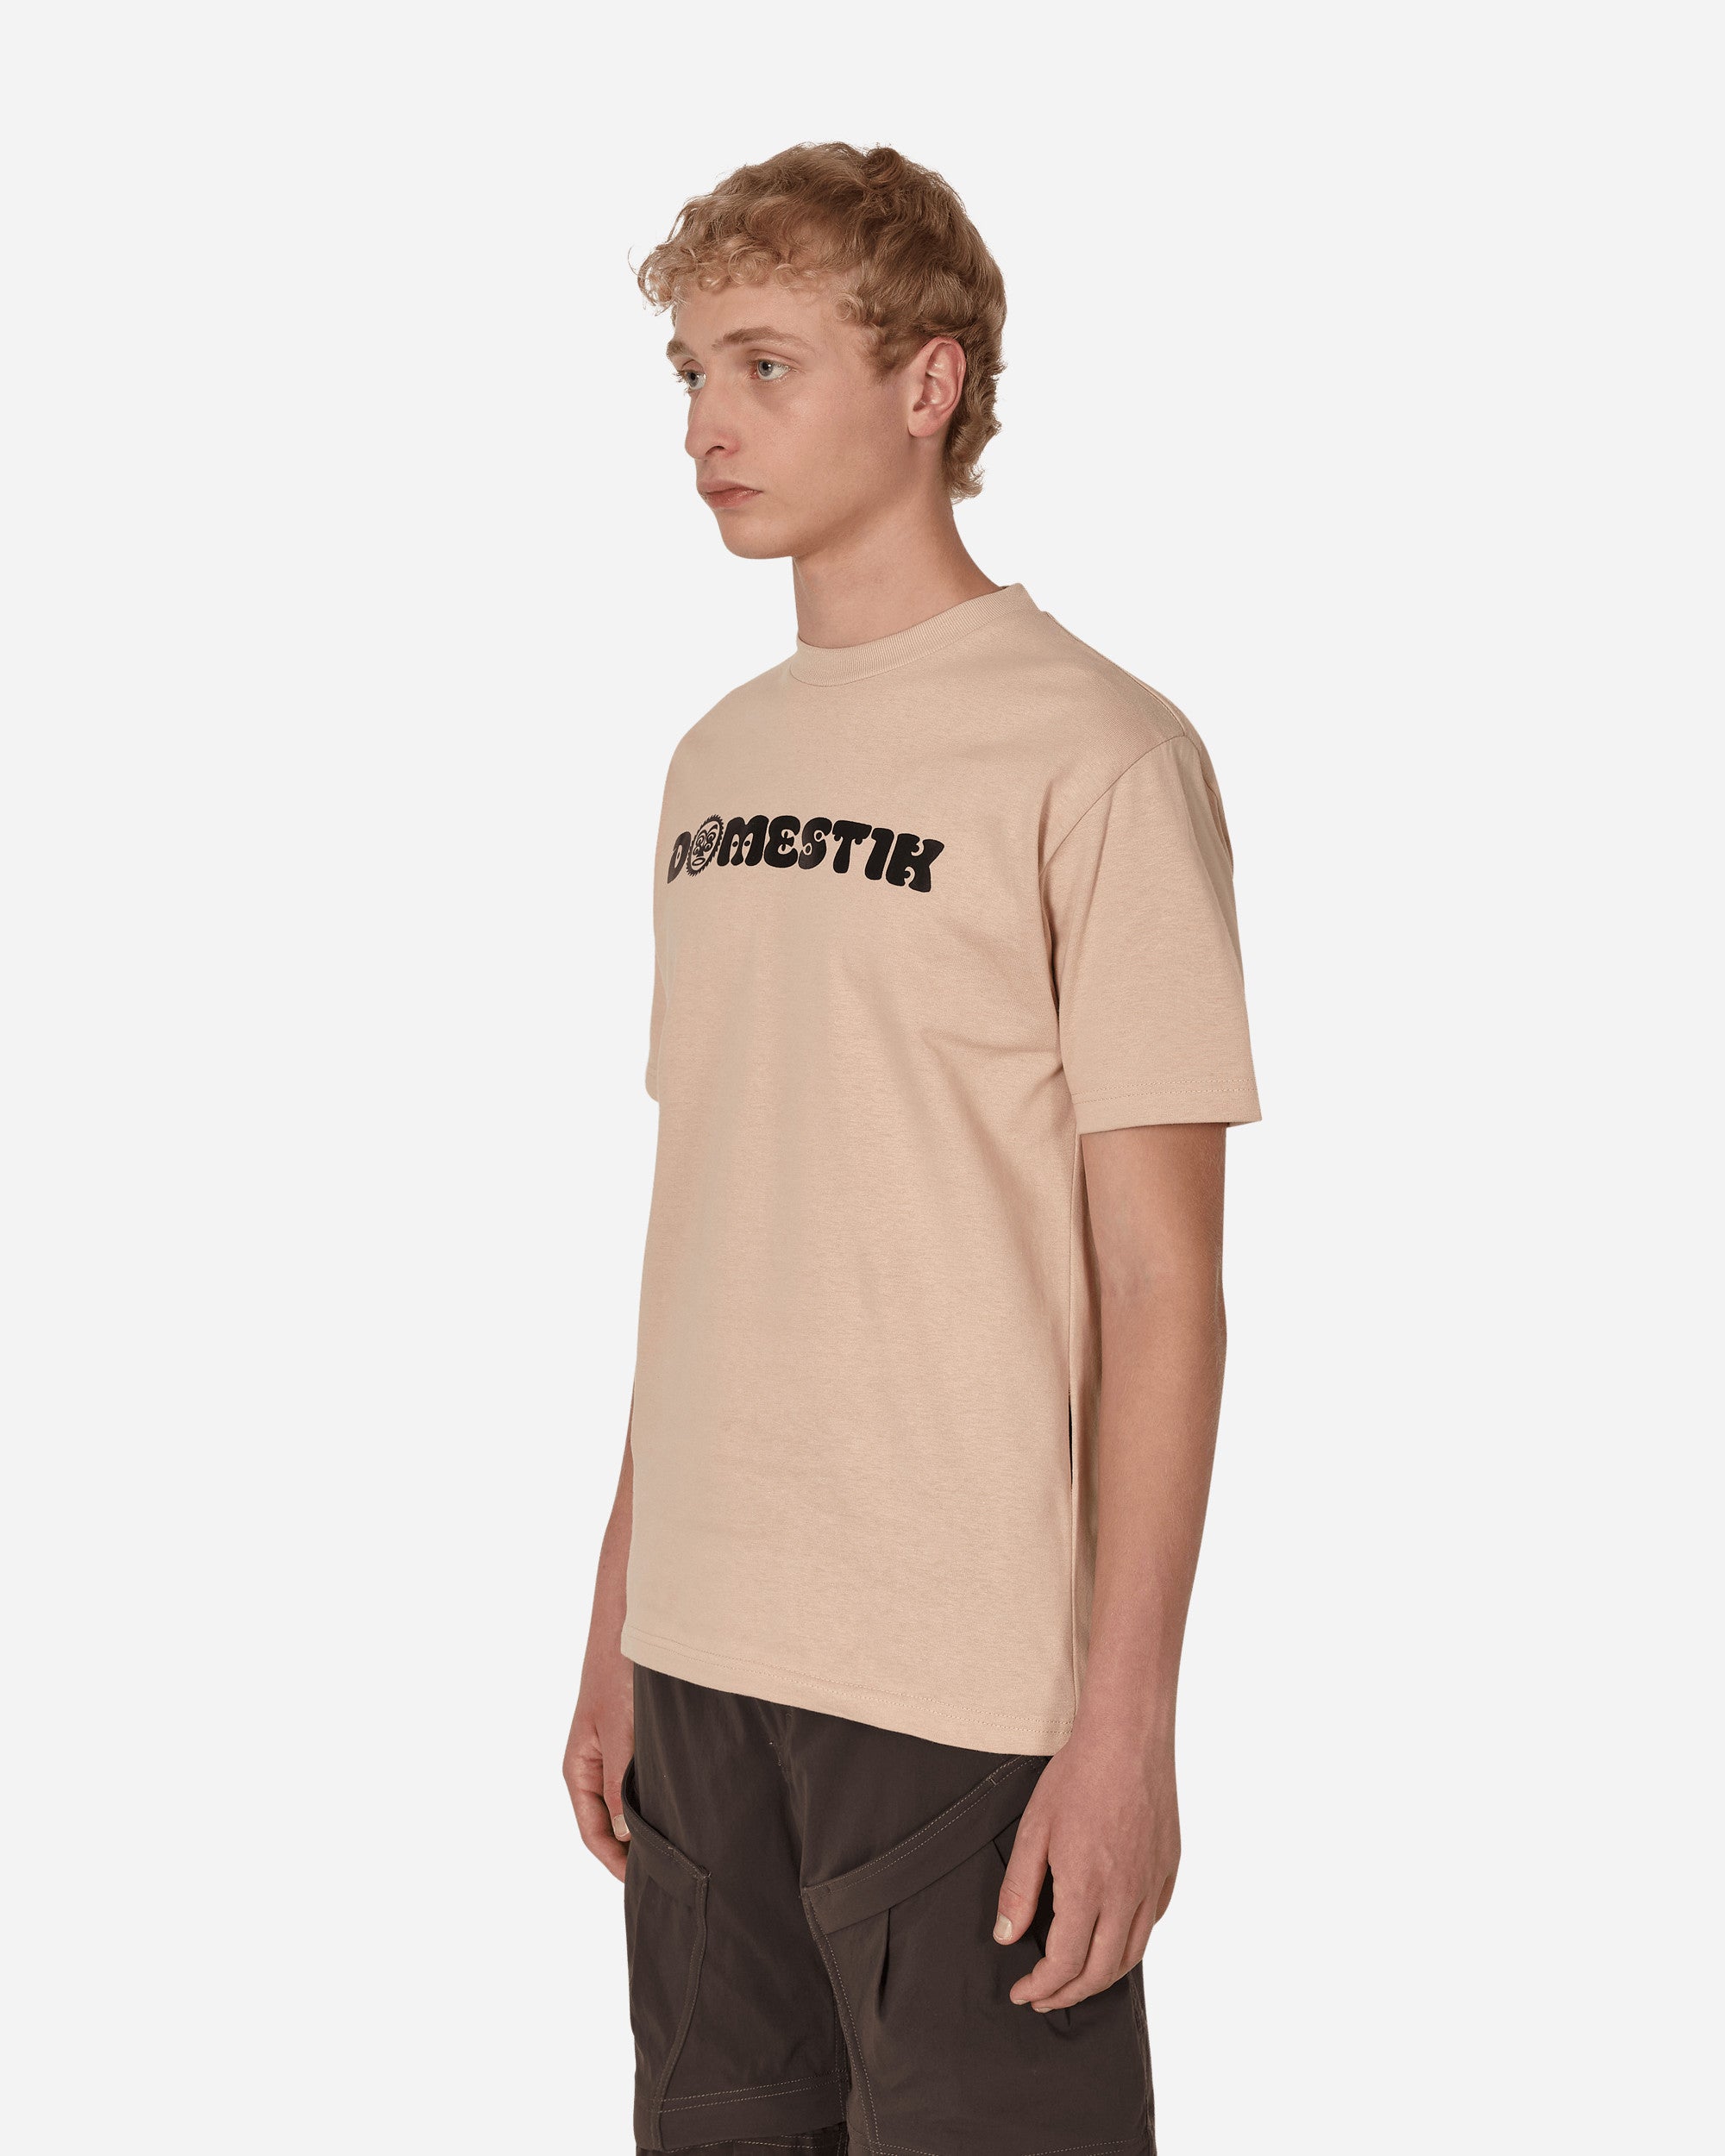 Domestik Possessed T-Shirt Beige T-Shirts Shortsleeve D01250098 1